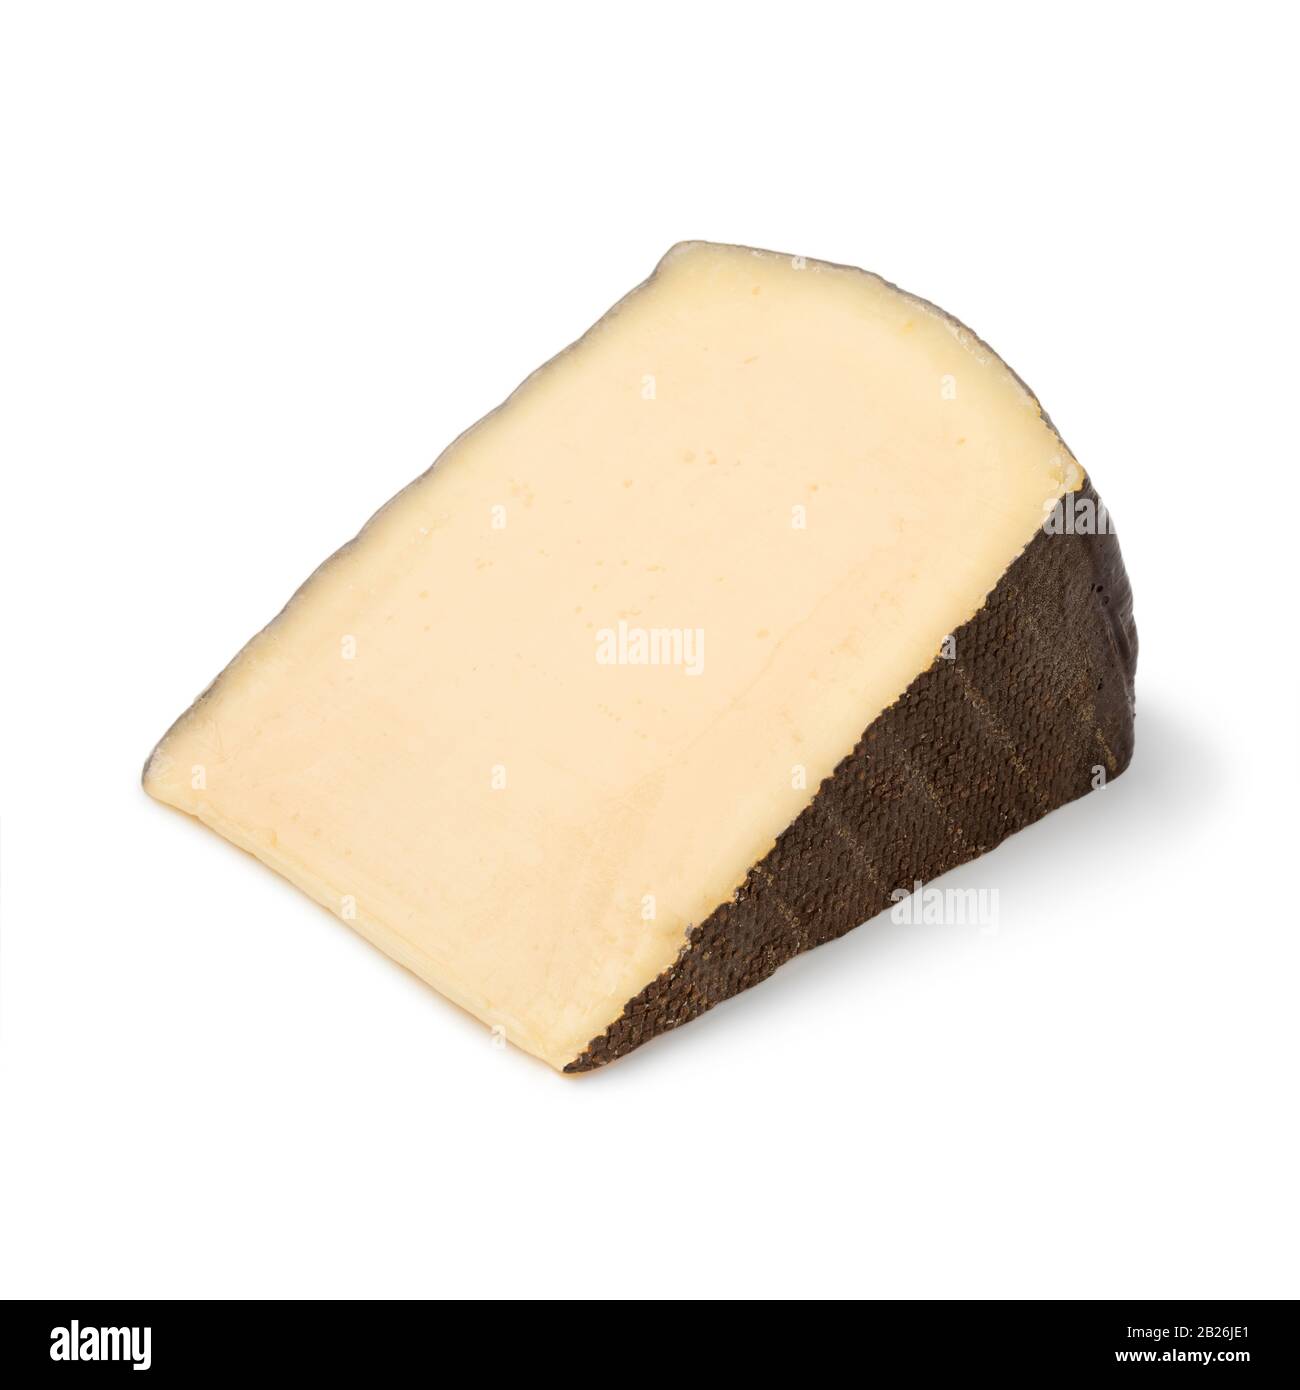 Wedge of Belgian Pere Joseph cheese isolated on white background Stock Photo